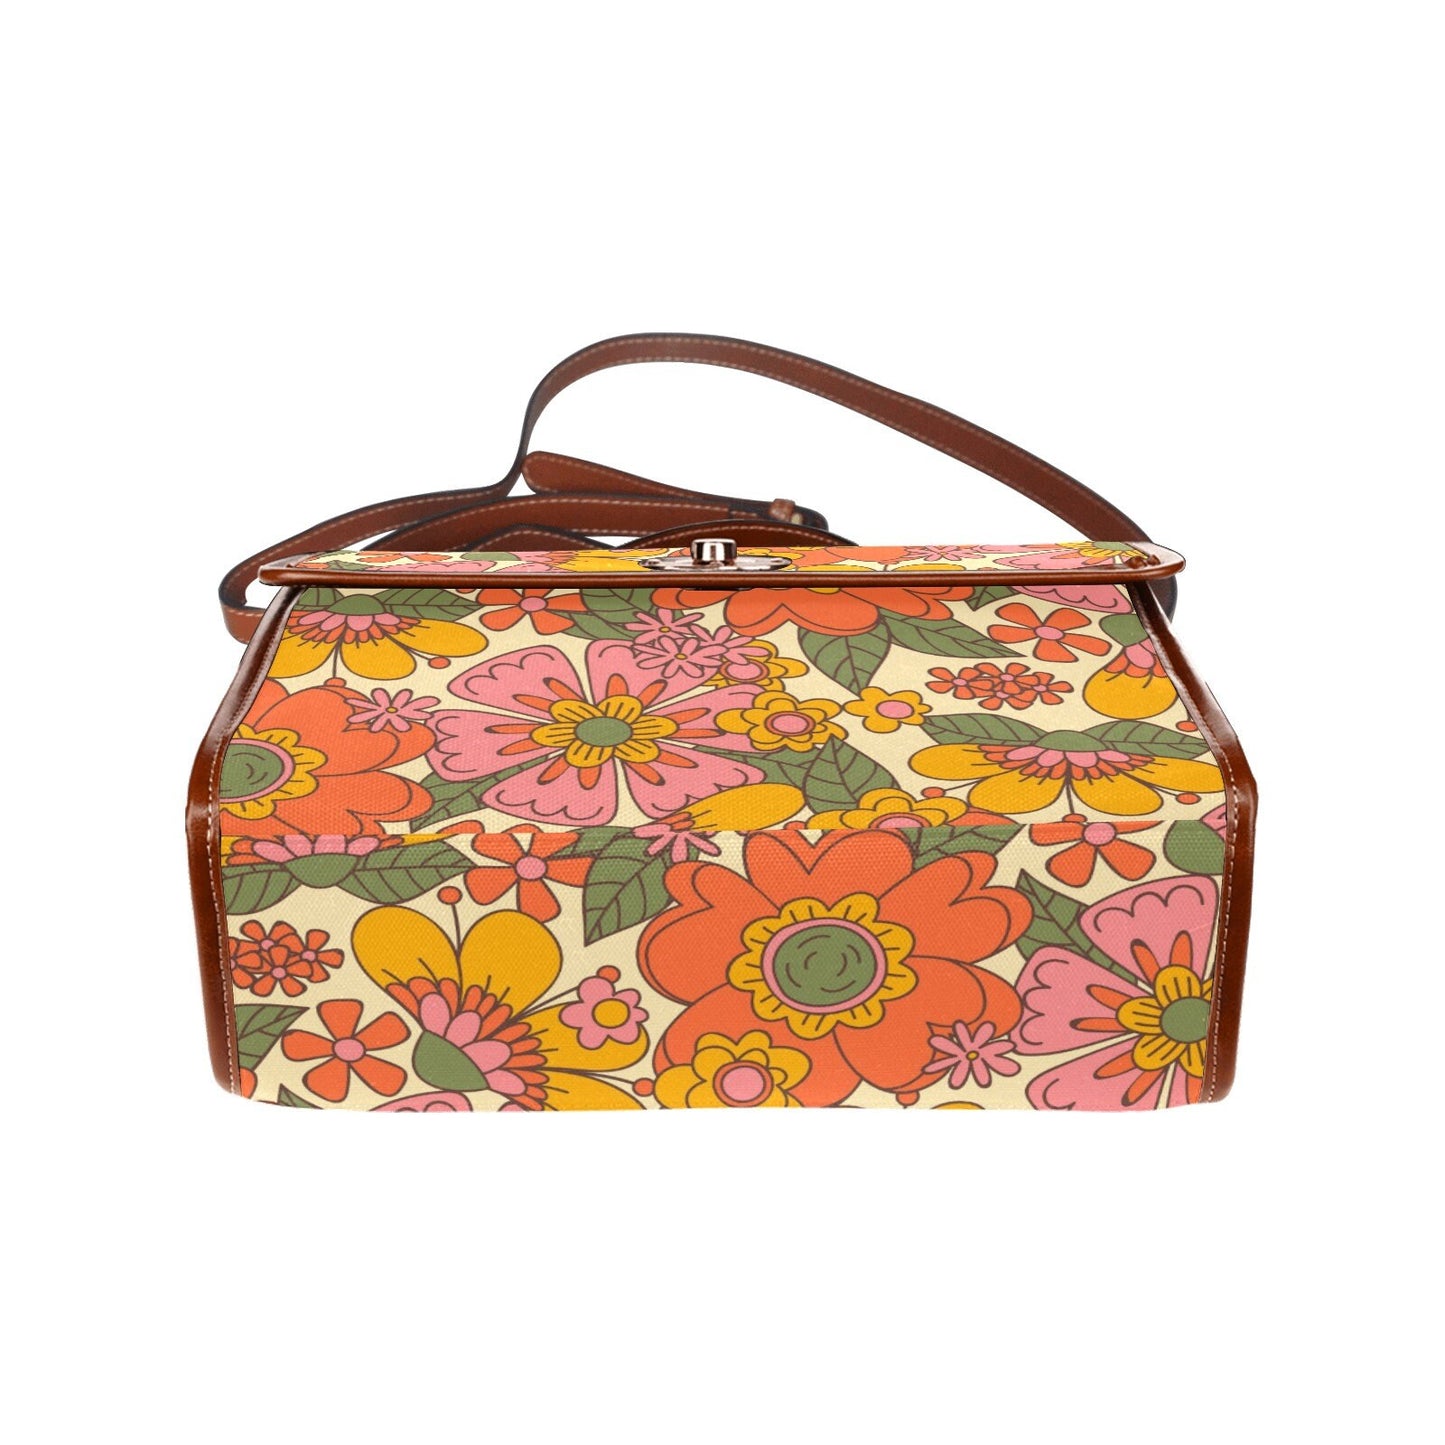 Women's Handbag, Retro Handbag, Women's Purse, Mod 60s, 70s Style bag, 70s Style purse, Floral Handbag, Floral Purse, 70s inspired,60s Style